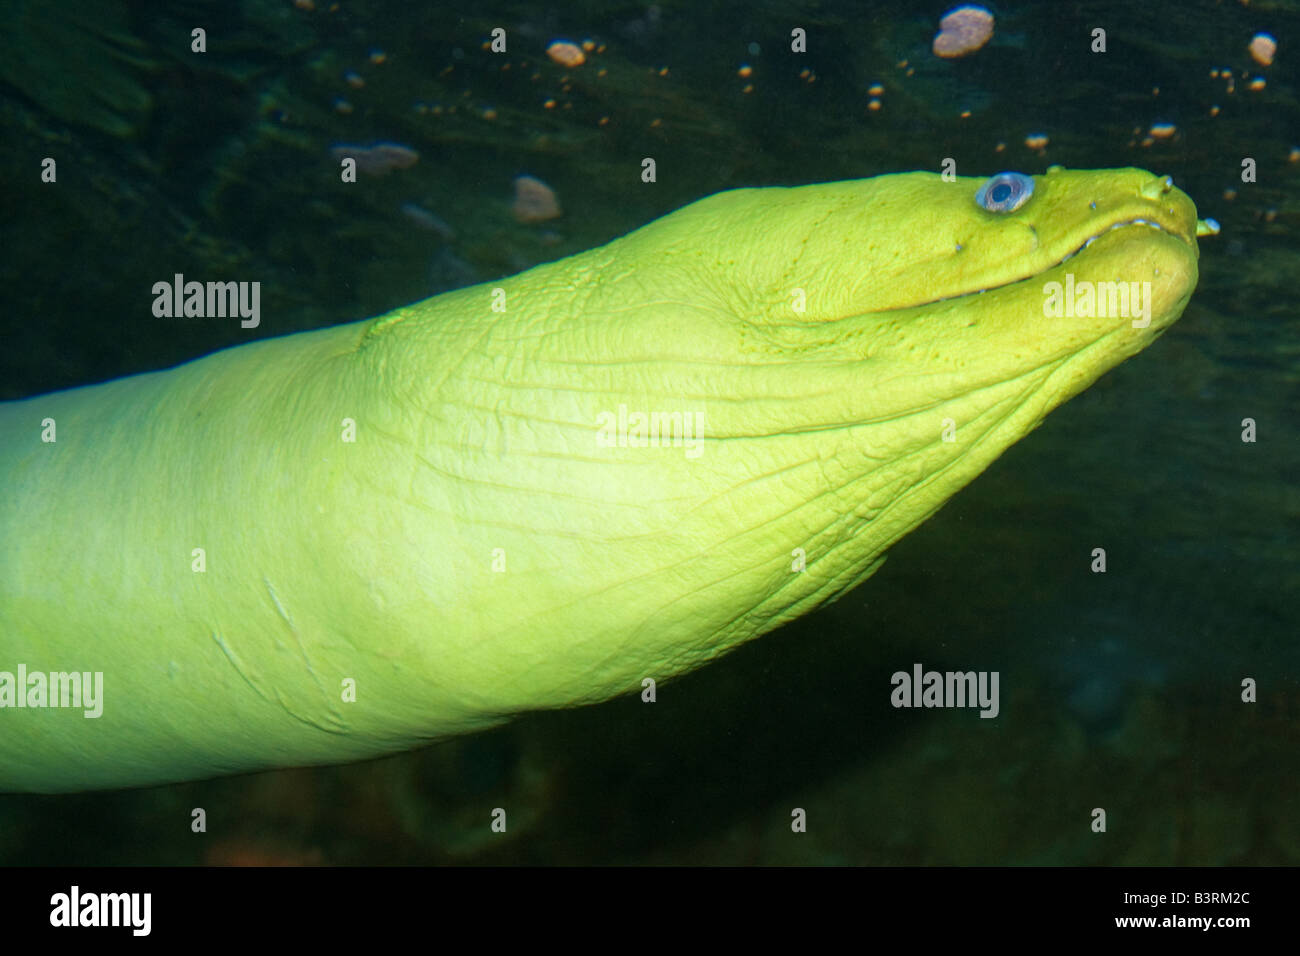 A close up colour head shot photograph of a green moray eel (003) Stock Photo